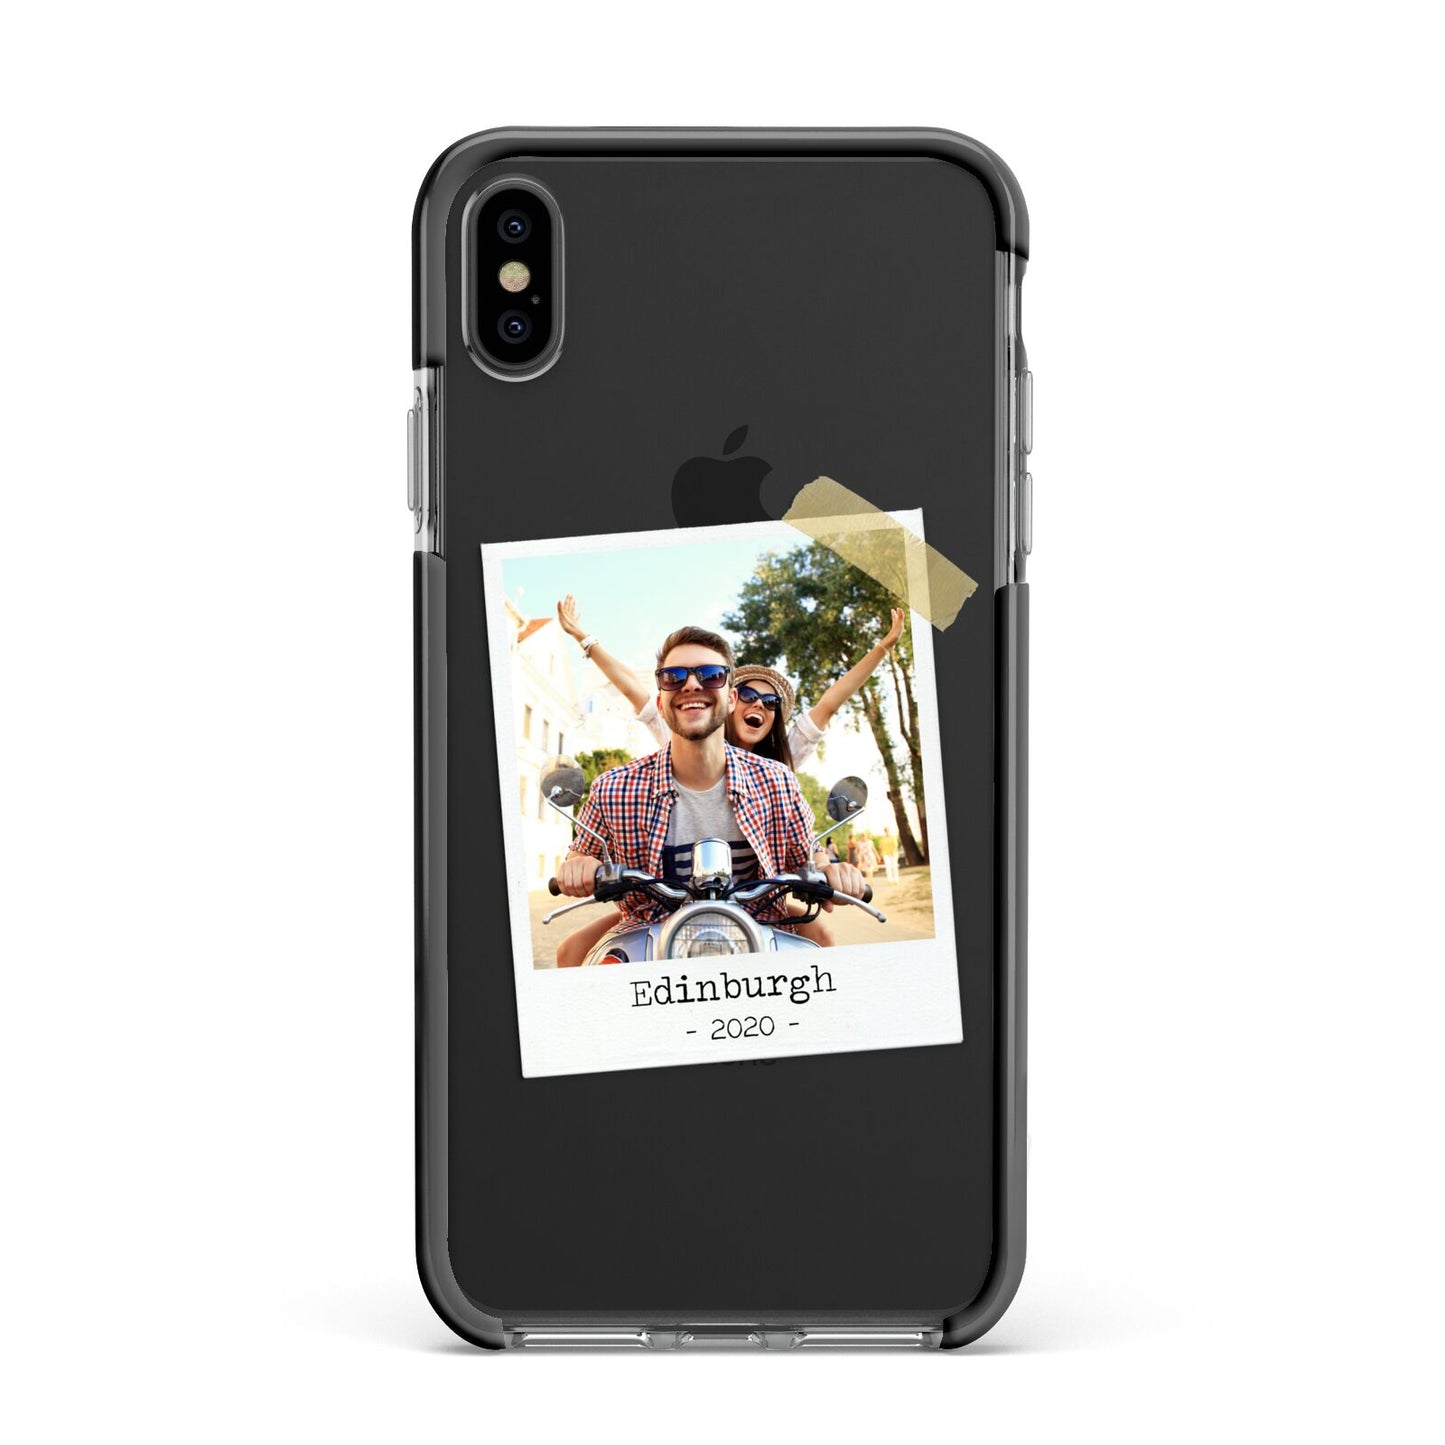 Taped Holiday Snap Photo Upload Apple iPhone Xs Max Impact Case Black Edge on Black Phone